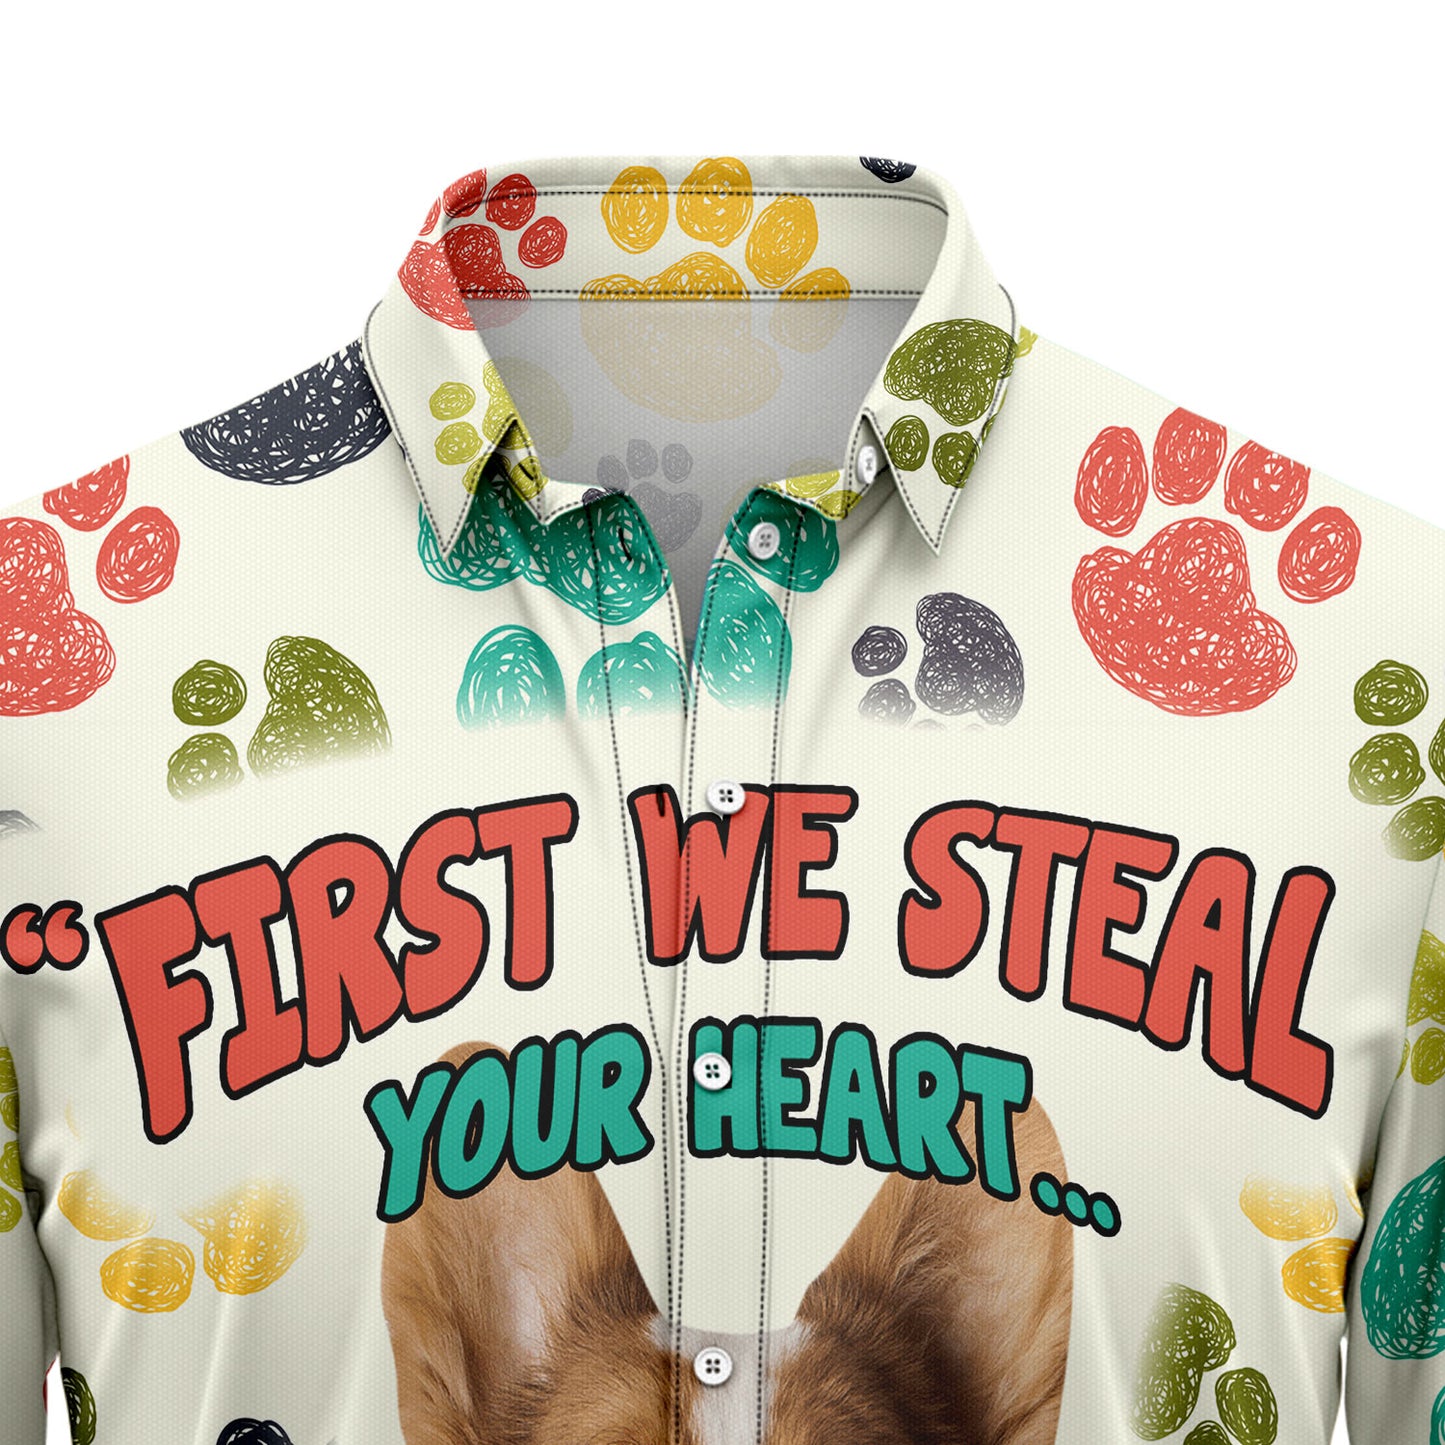 Cardigan Welsh Corgi Steal Your Heart H28812 Hawaiian Shirt